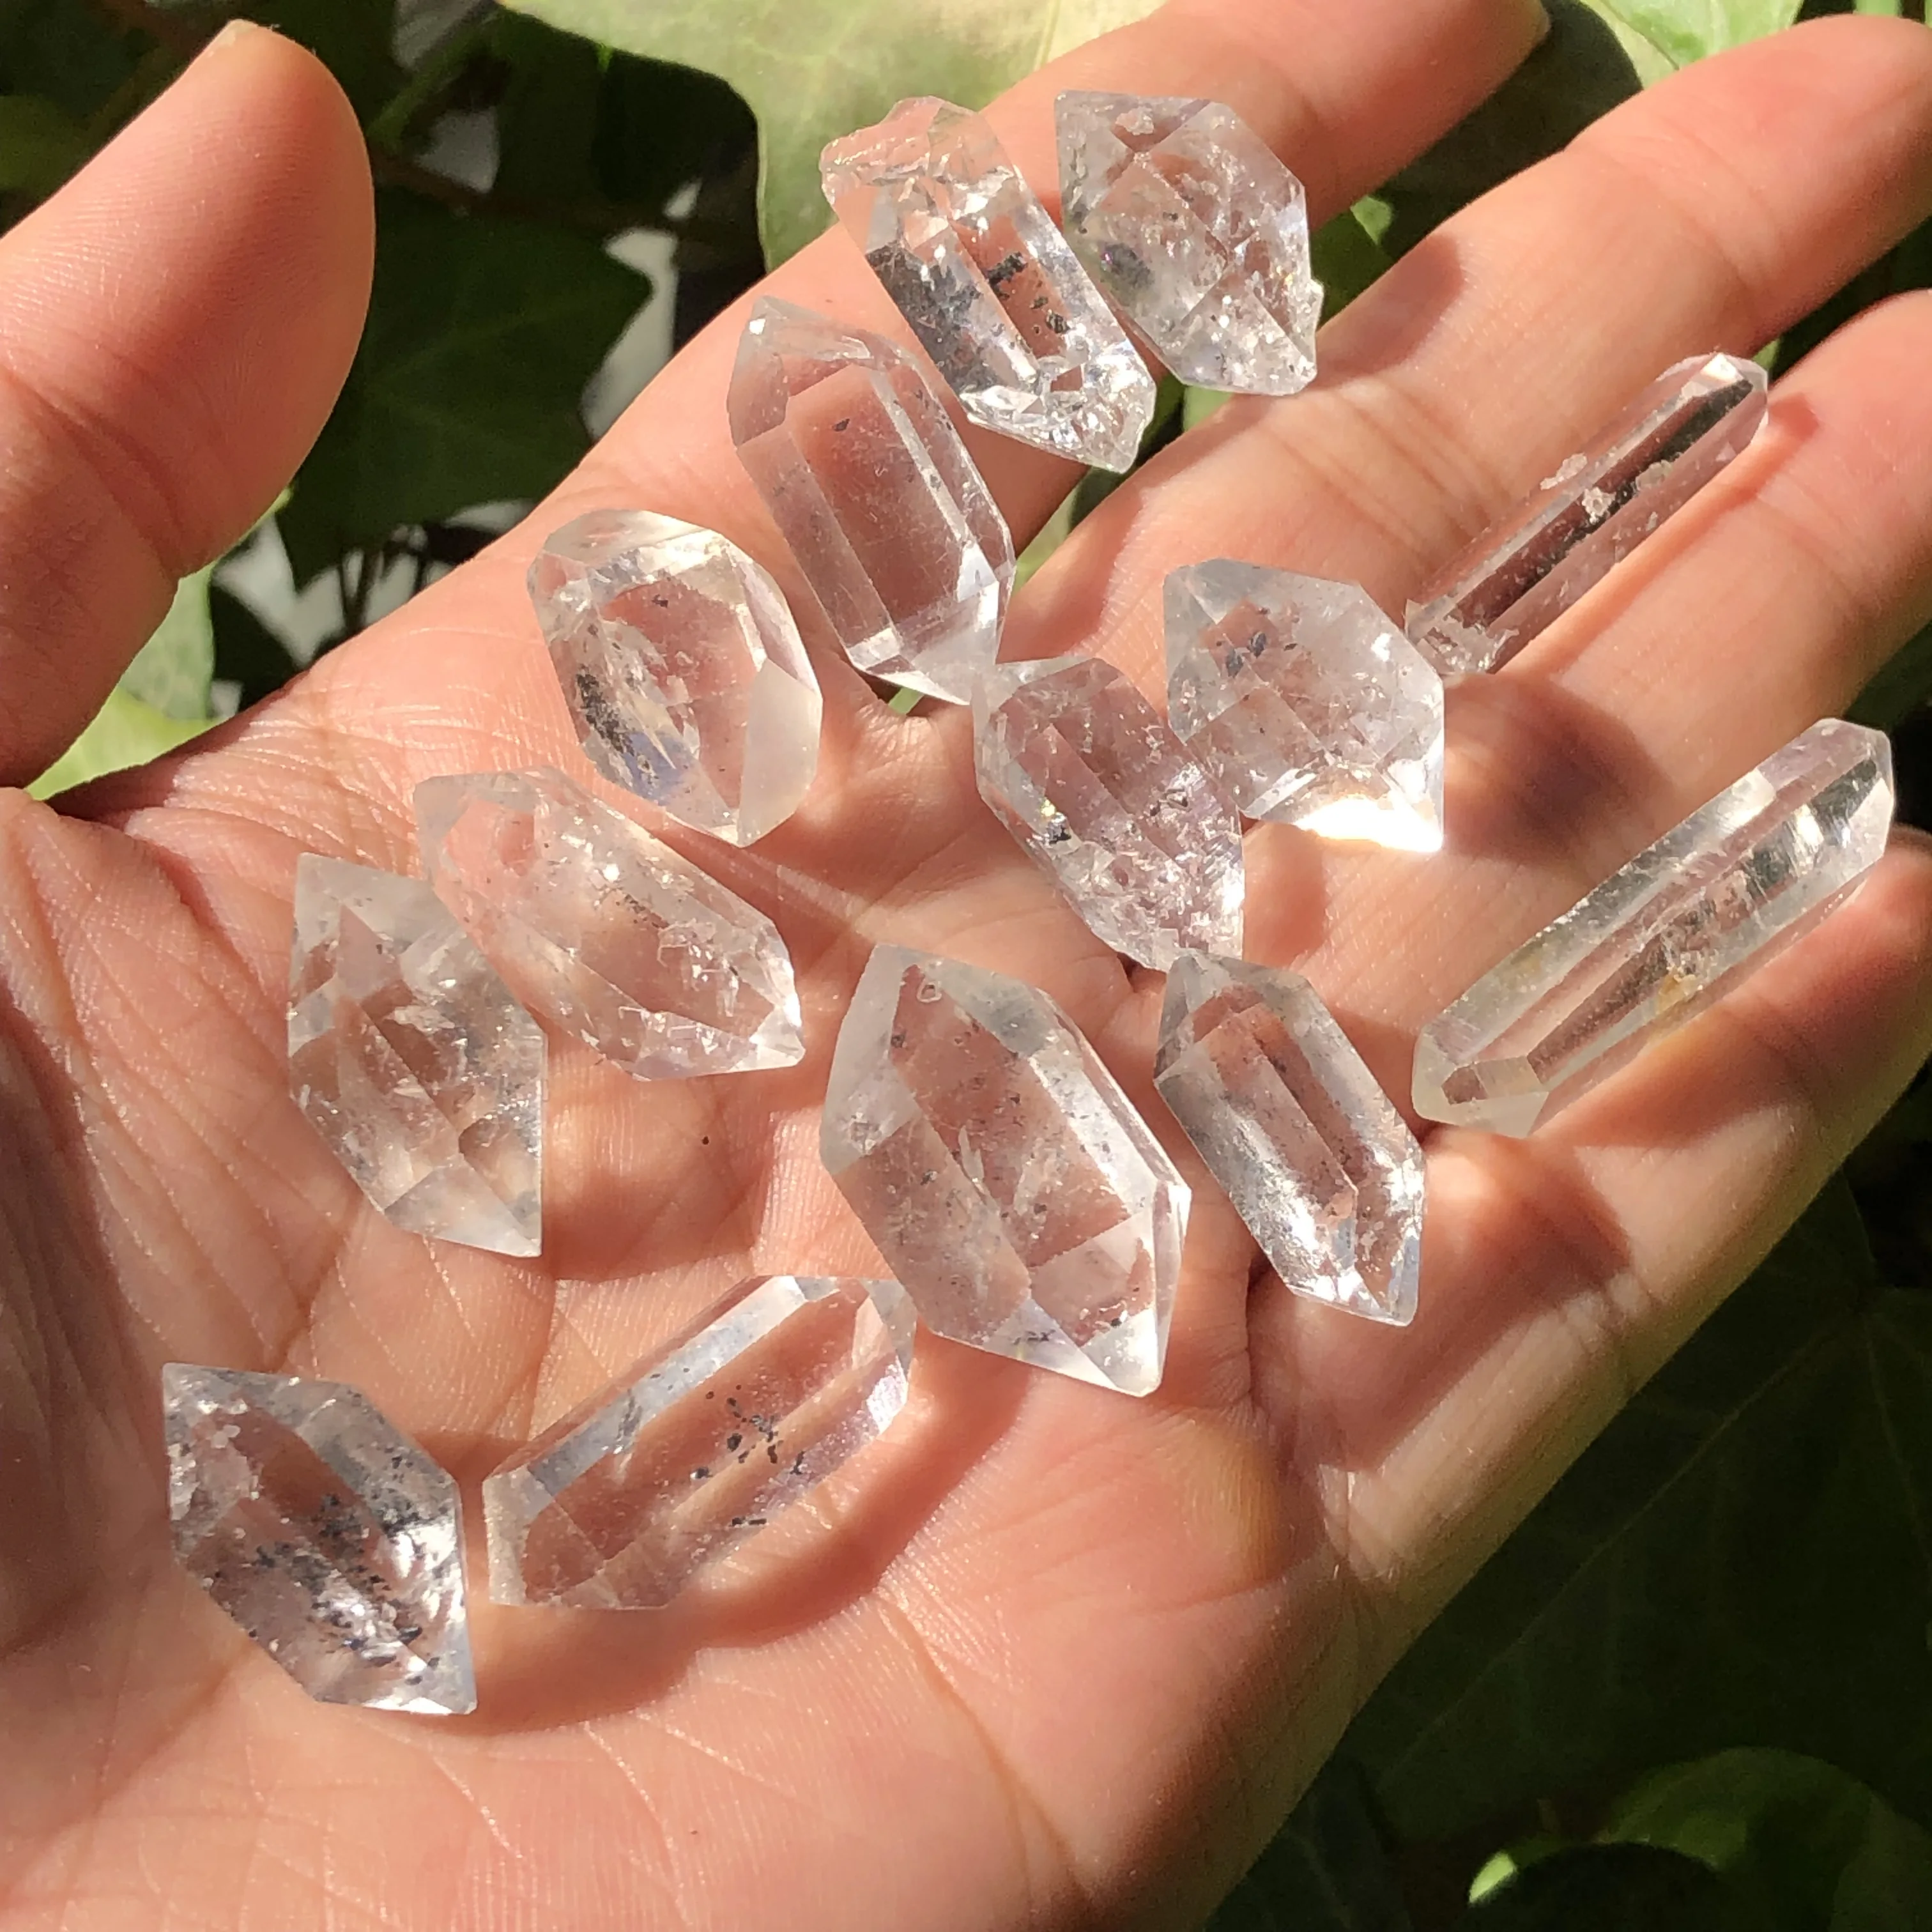 14-pcs-natural-herkimer-diamond-pendant-crystal-healing-stone-fashion-jewelry-gift-for-women-men